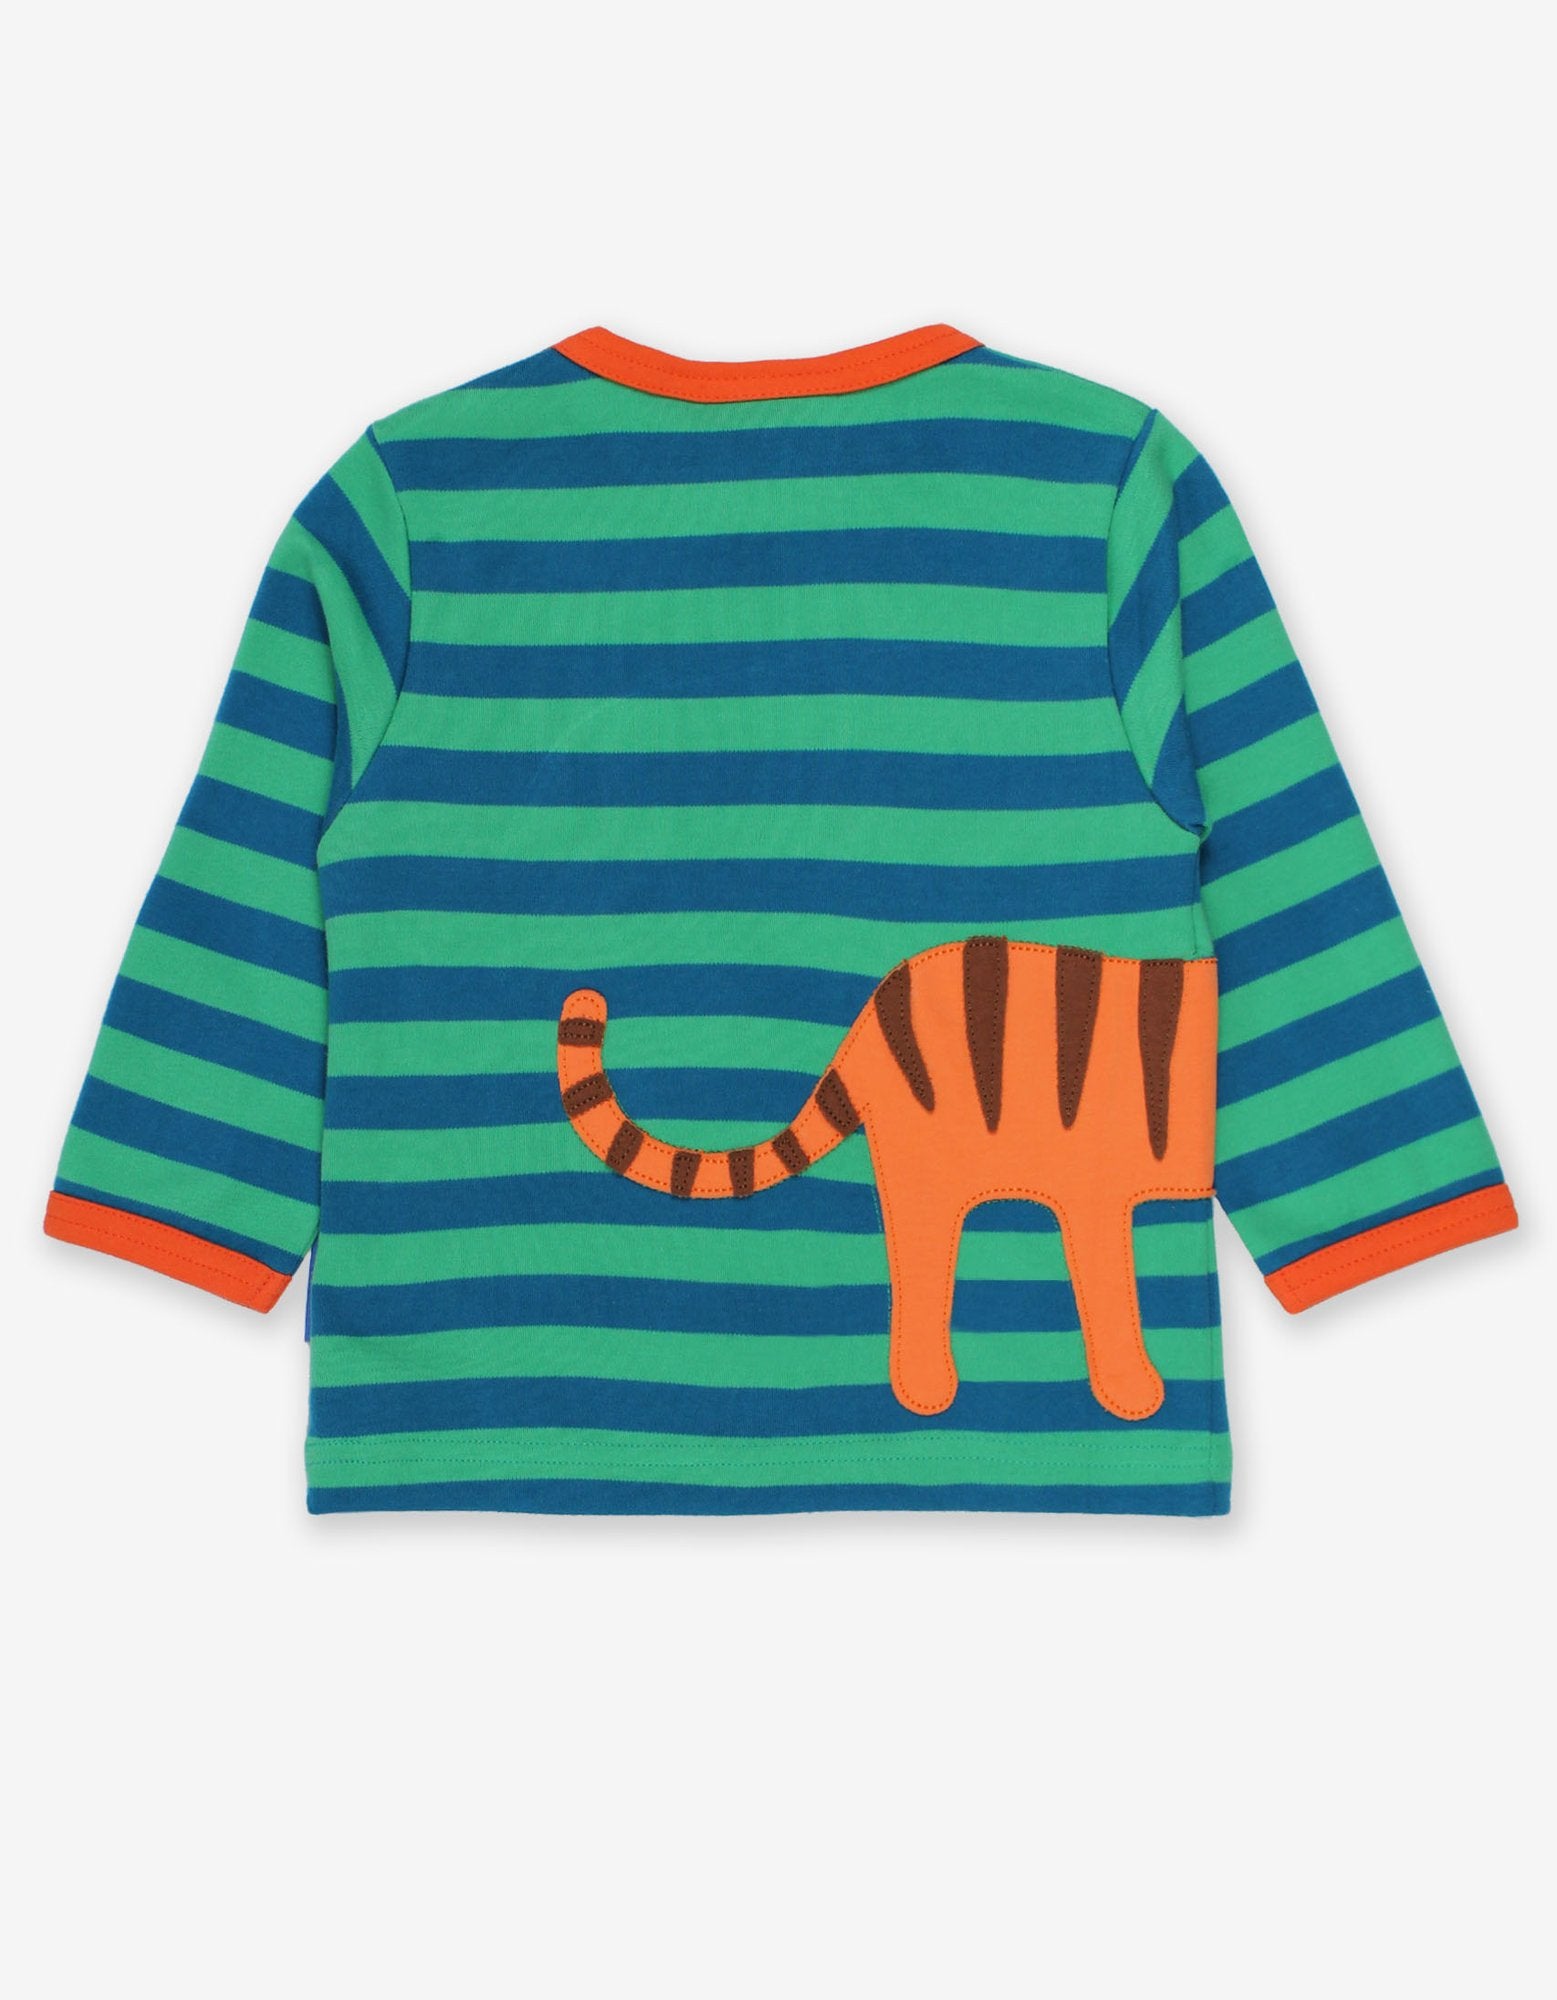 Toby Tiger Organic Long Sleeve T-Shirt - Born Free Tiger Applique